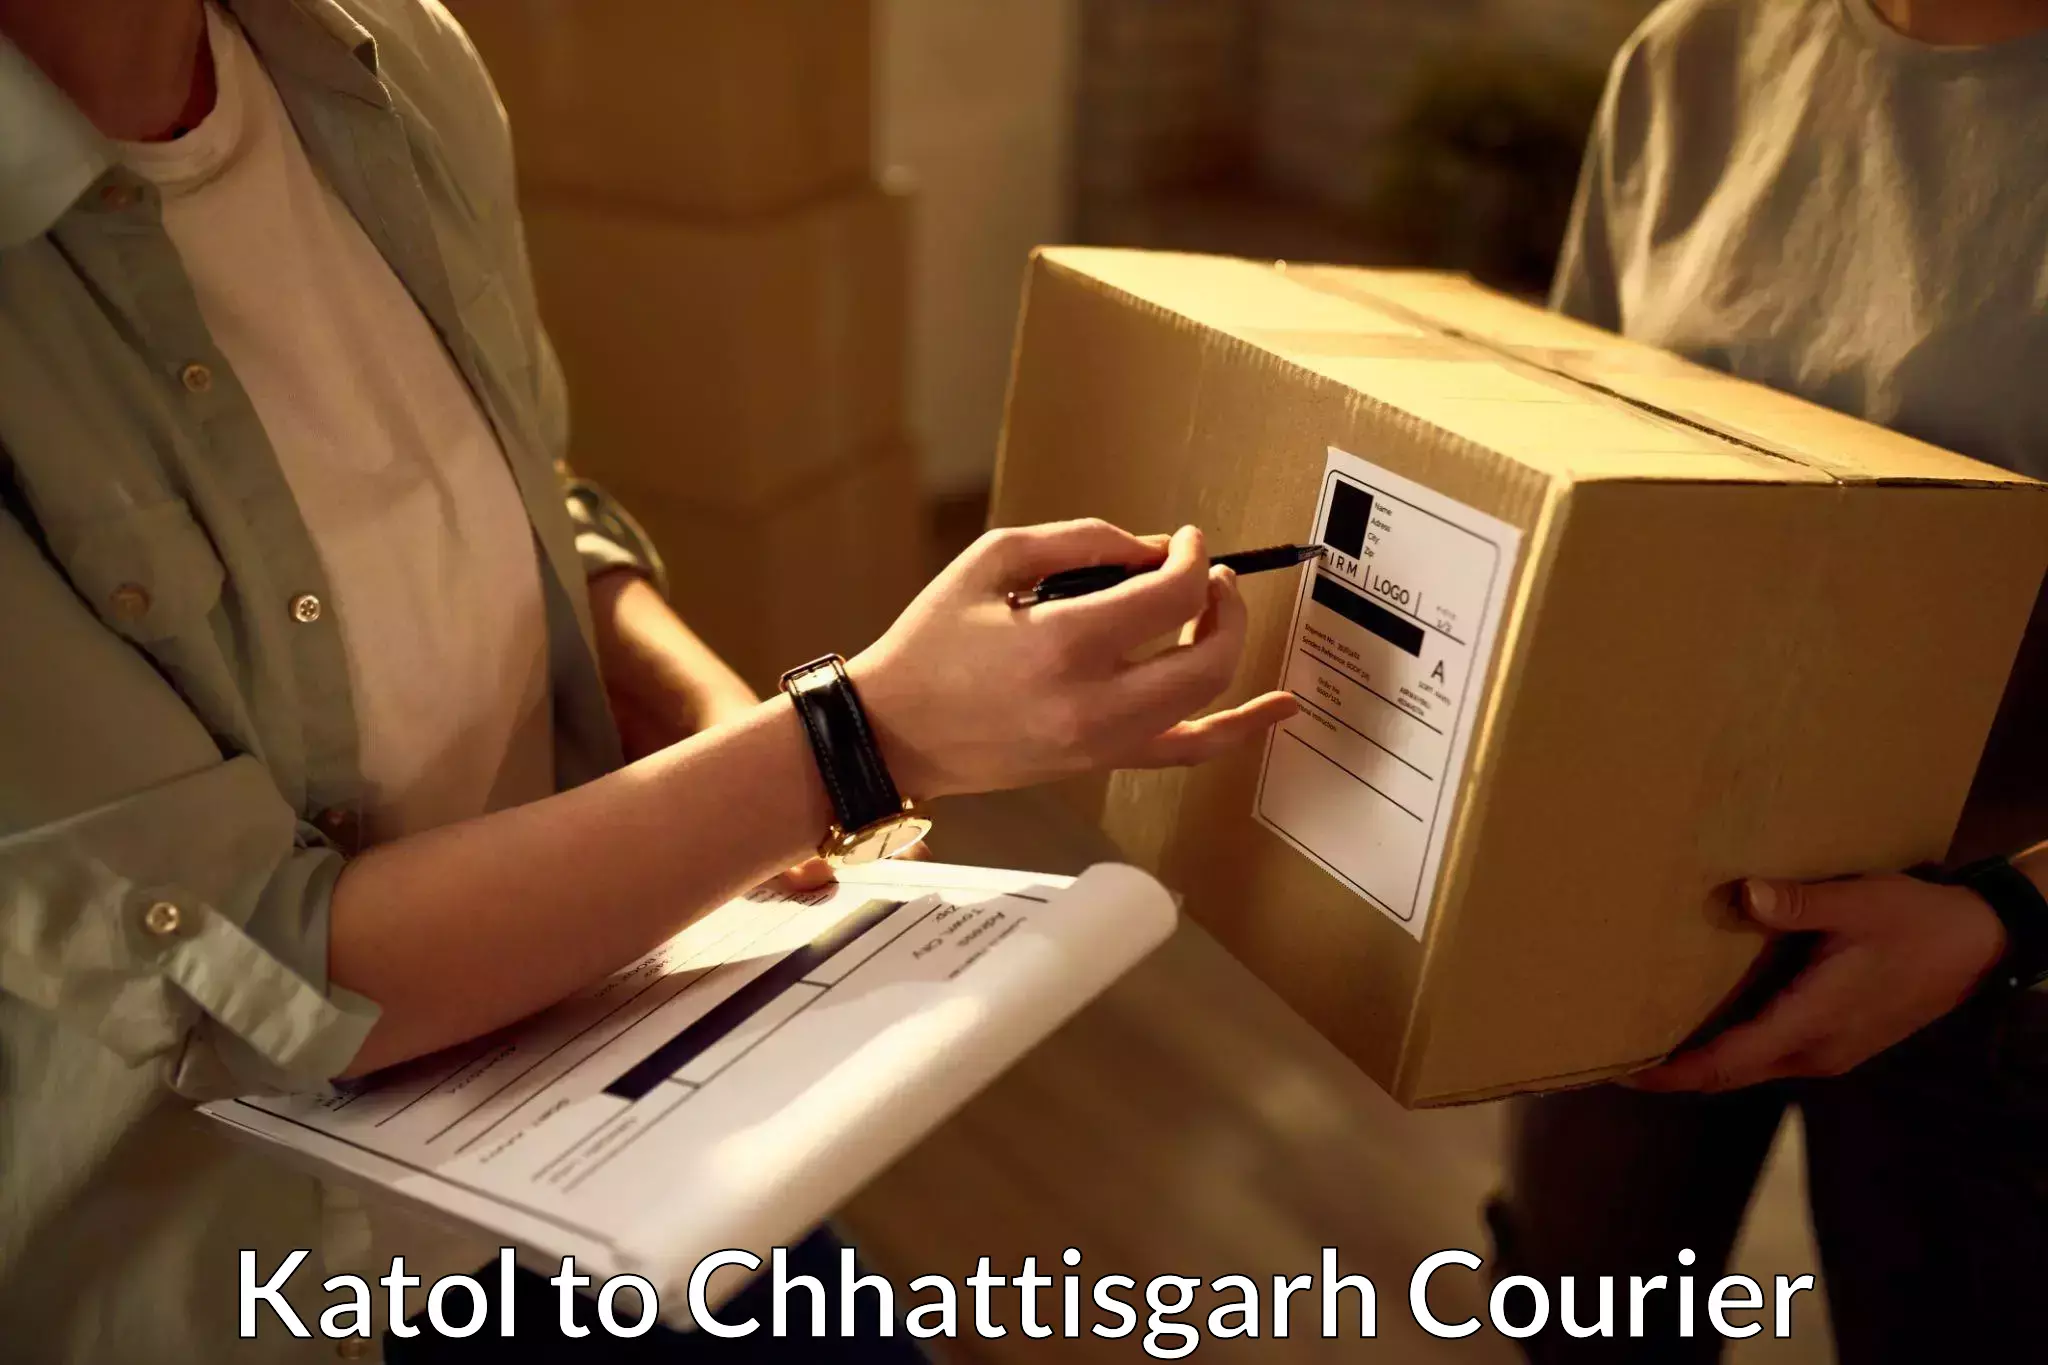 Affordable parcel service Katol to Korea Chhattisgarh